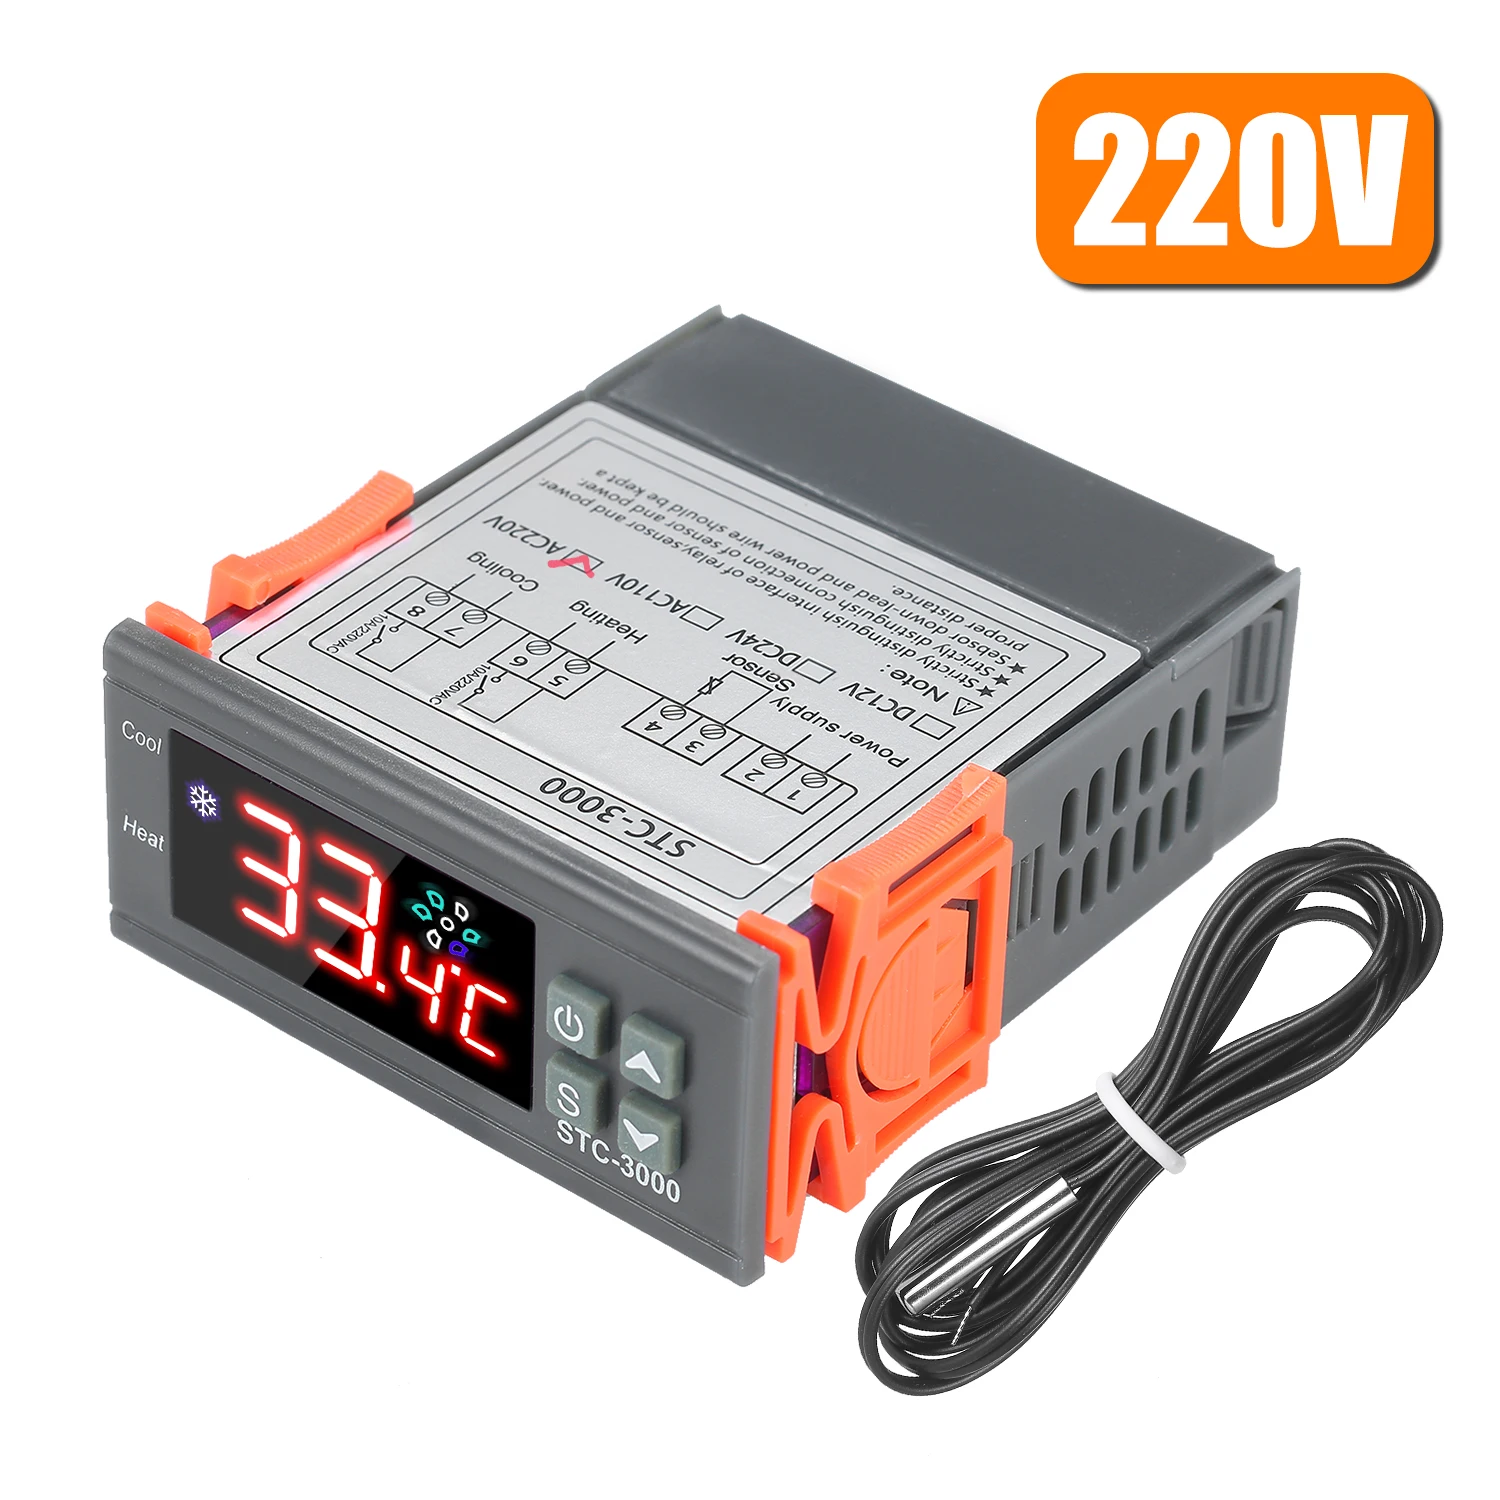 12V/220V Digital Temperaturregler Thermostat LED Control Temperatur Regler New 